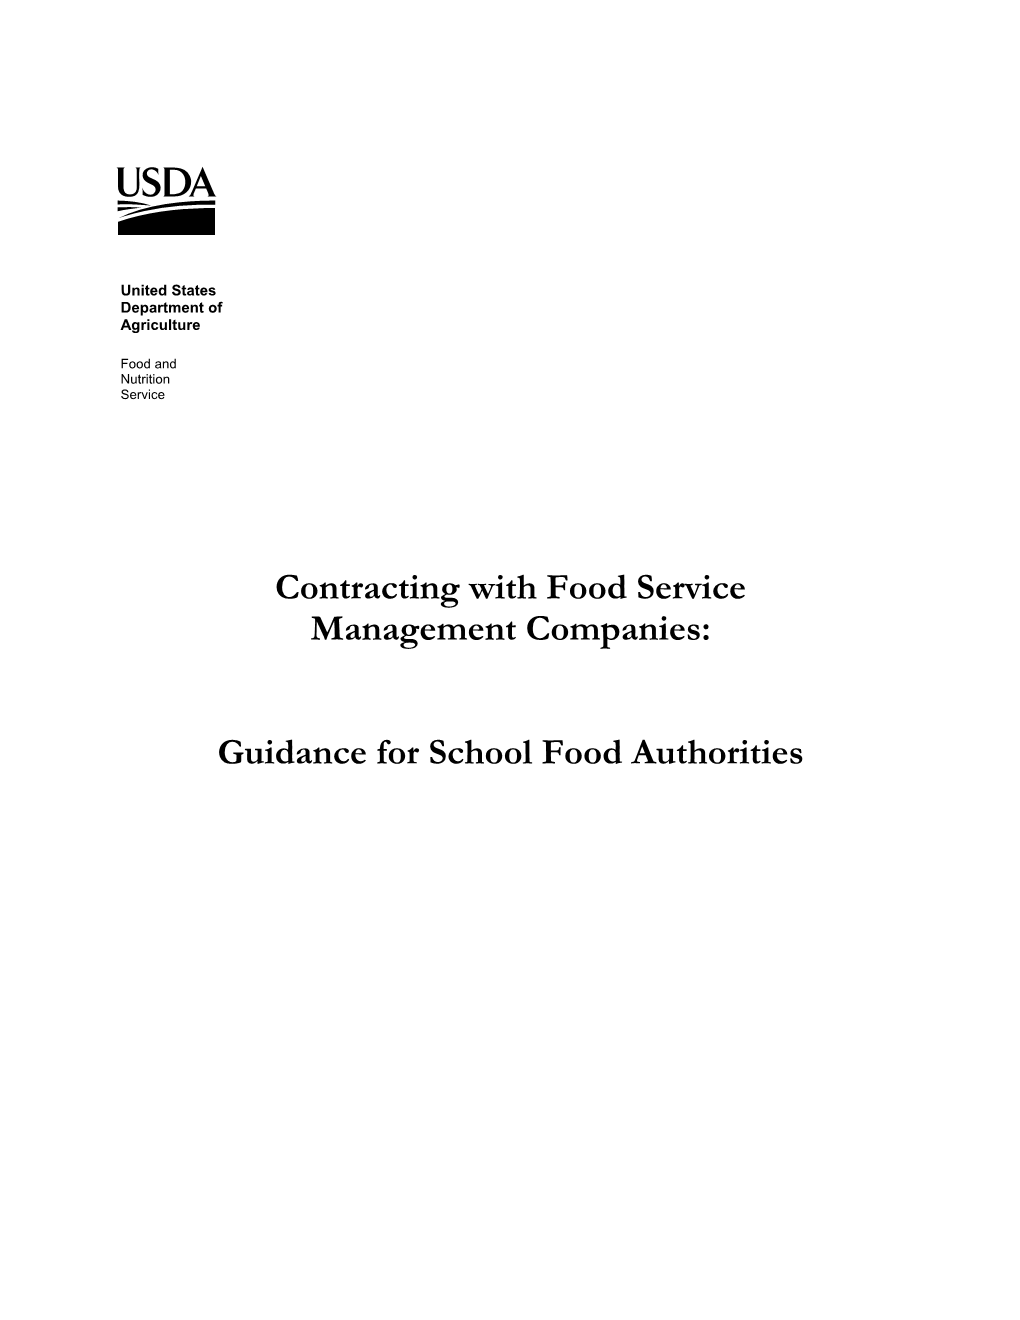 USDA Guidance for School Food Authorities (Sfas)